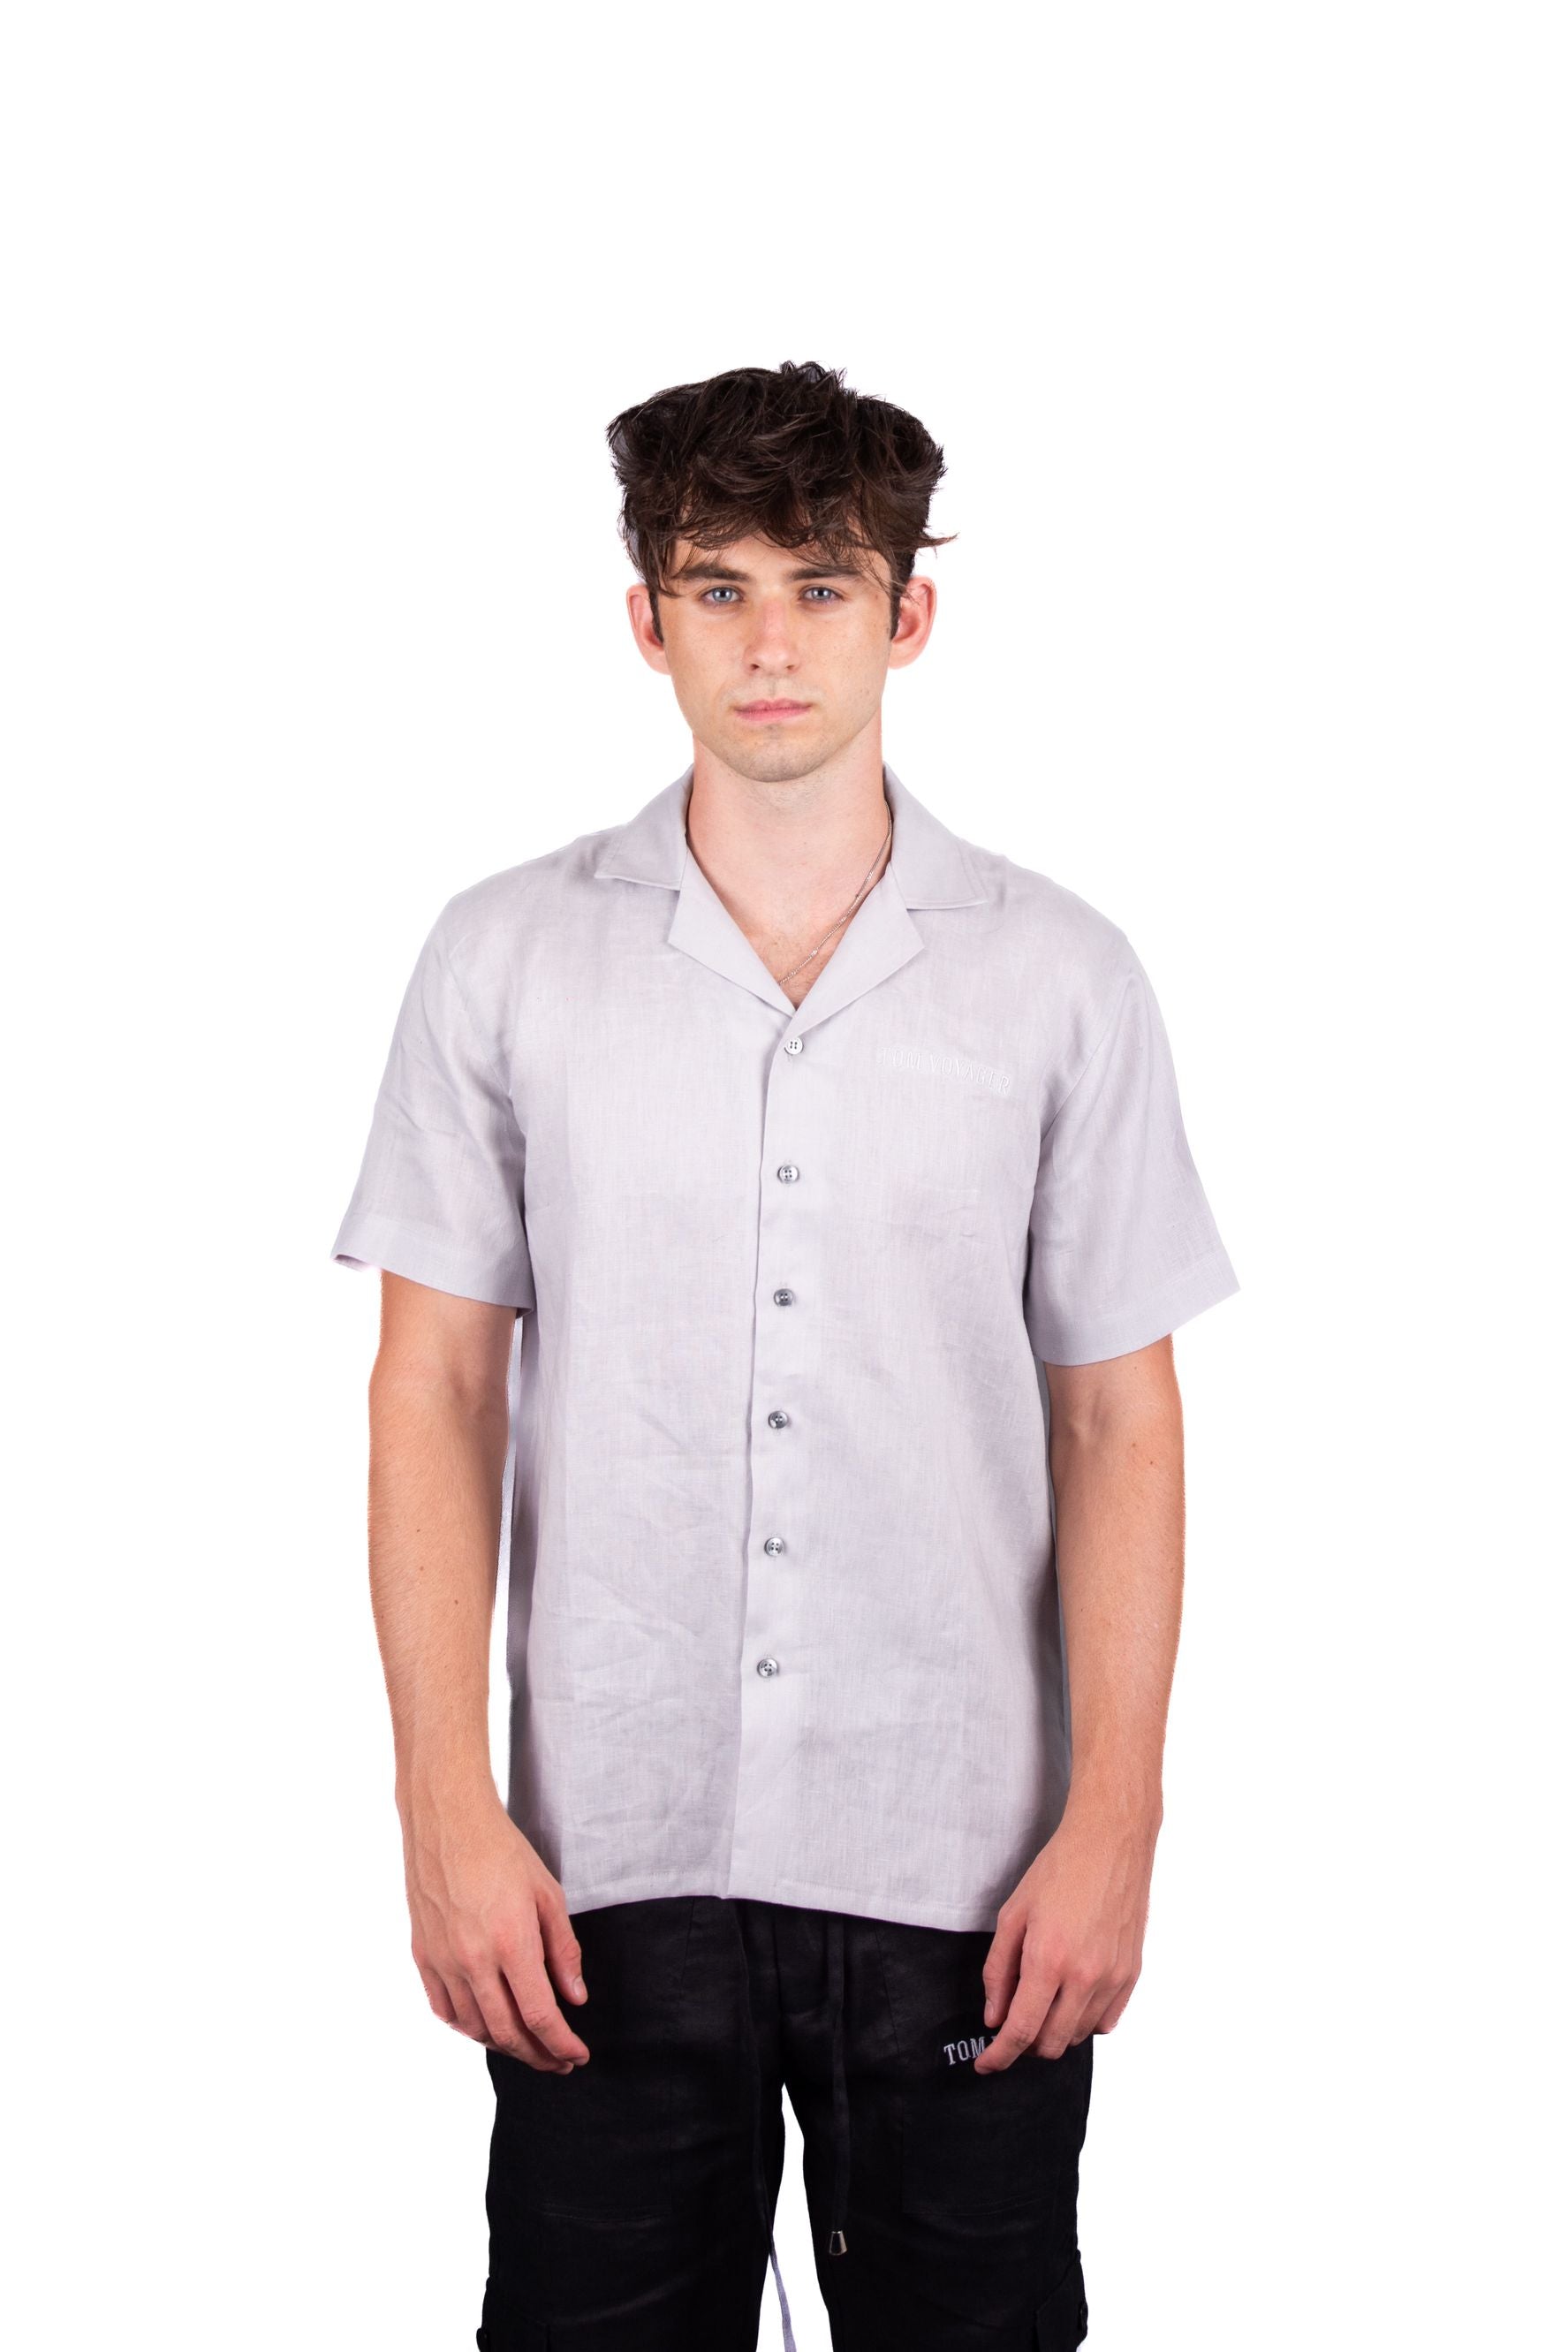 Austin Linen Shirt - Short Sleeve Shirt-mens shirt - Tom Voyager